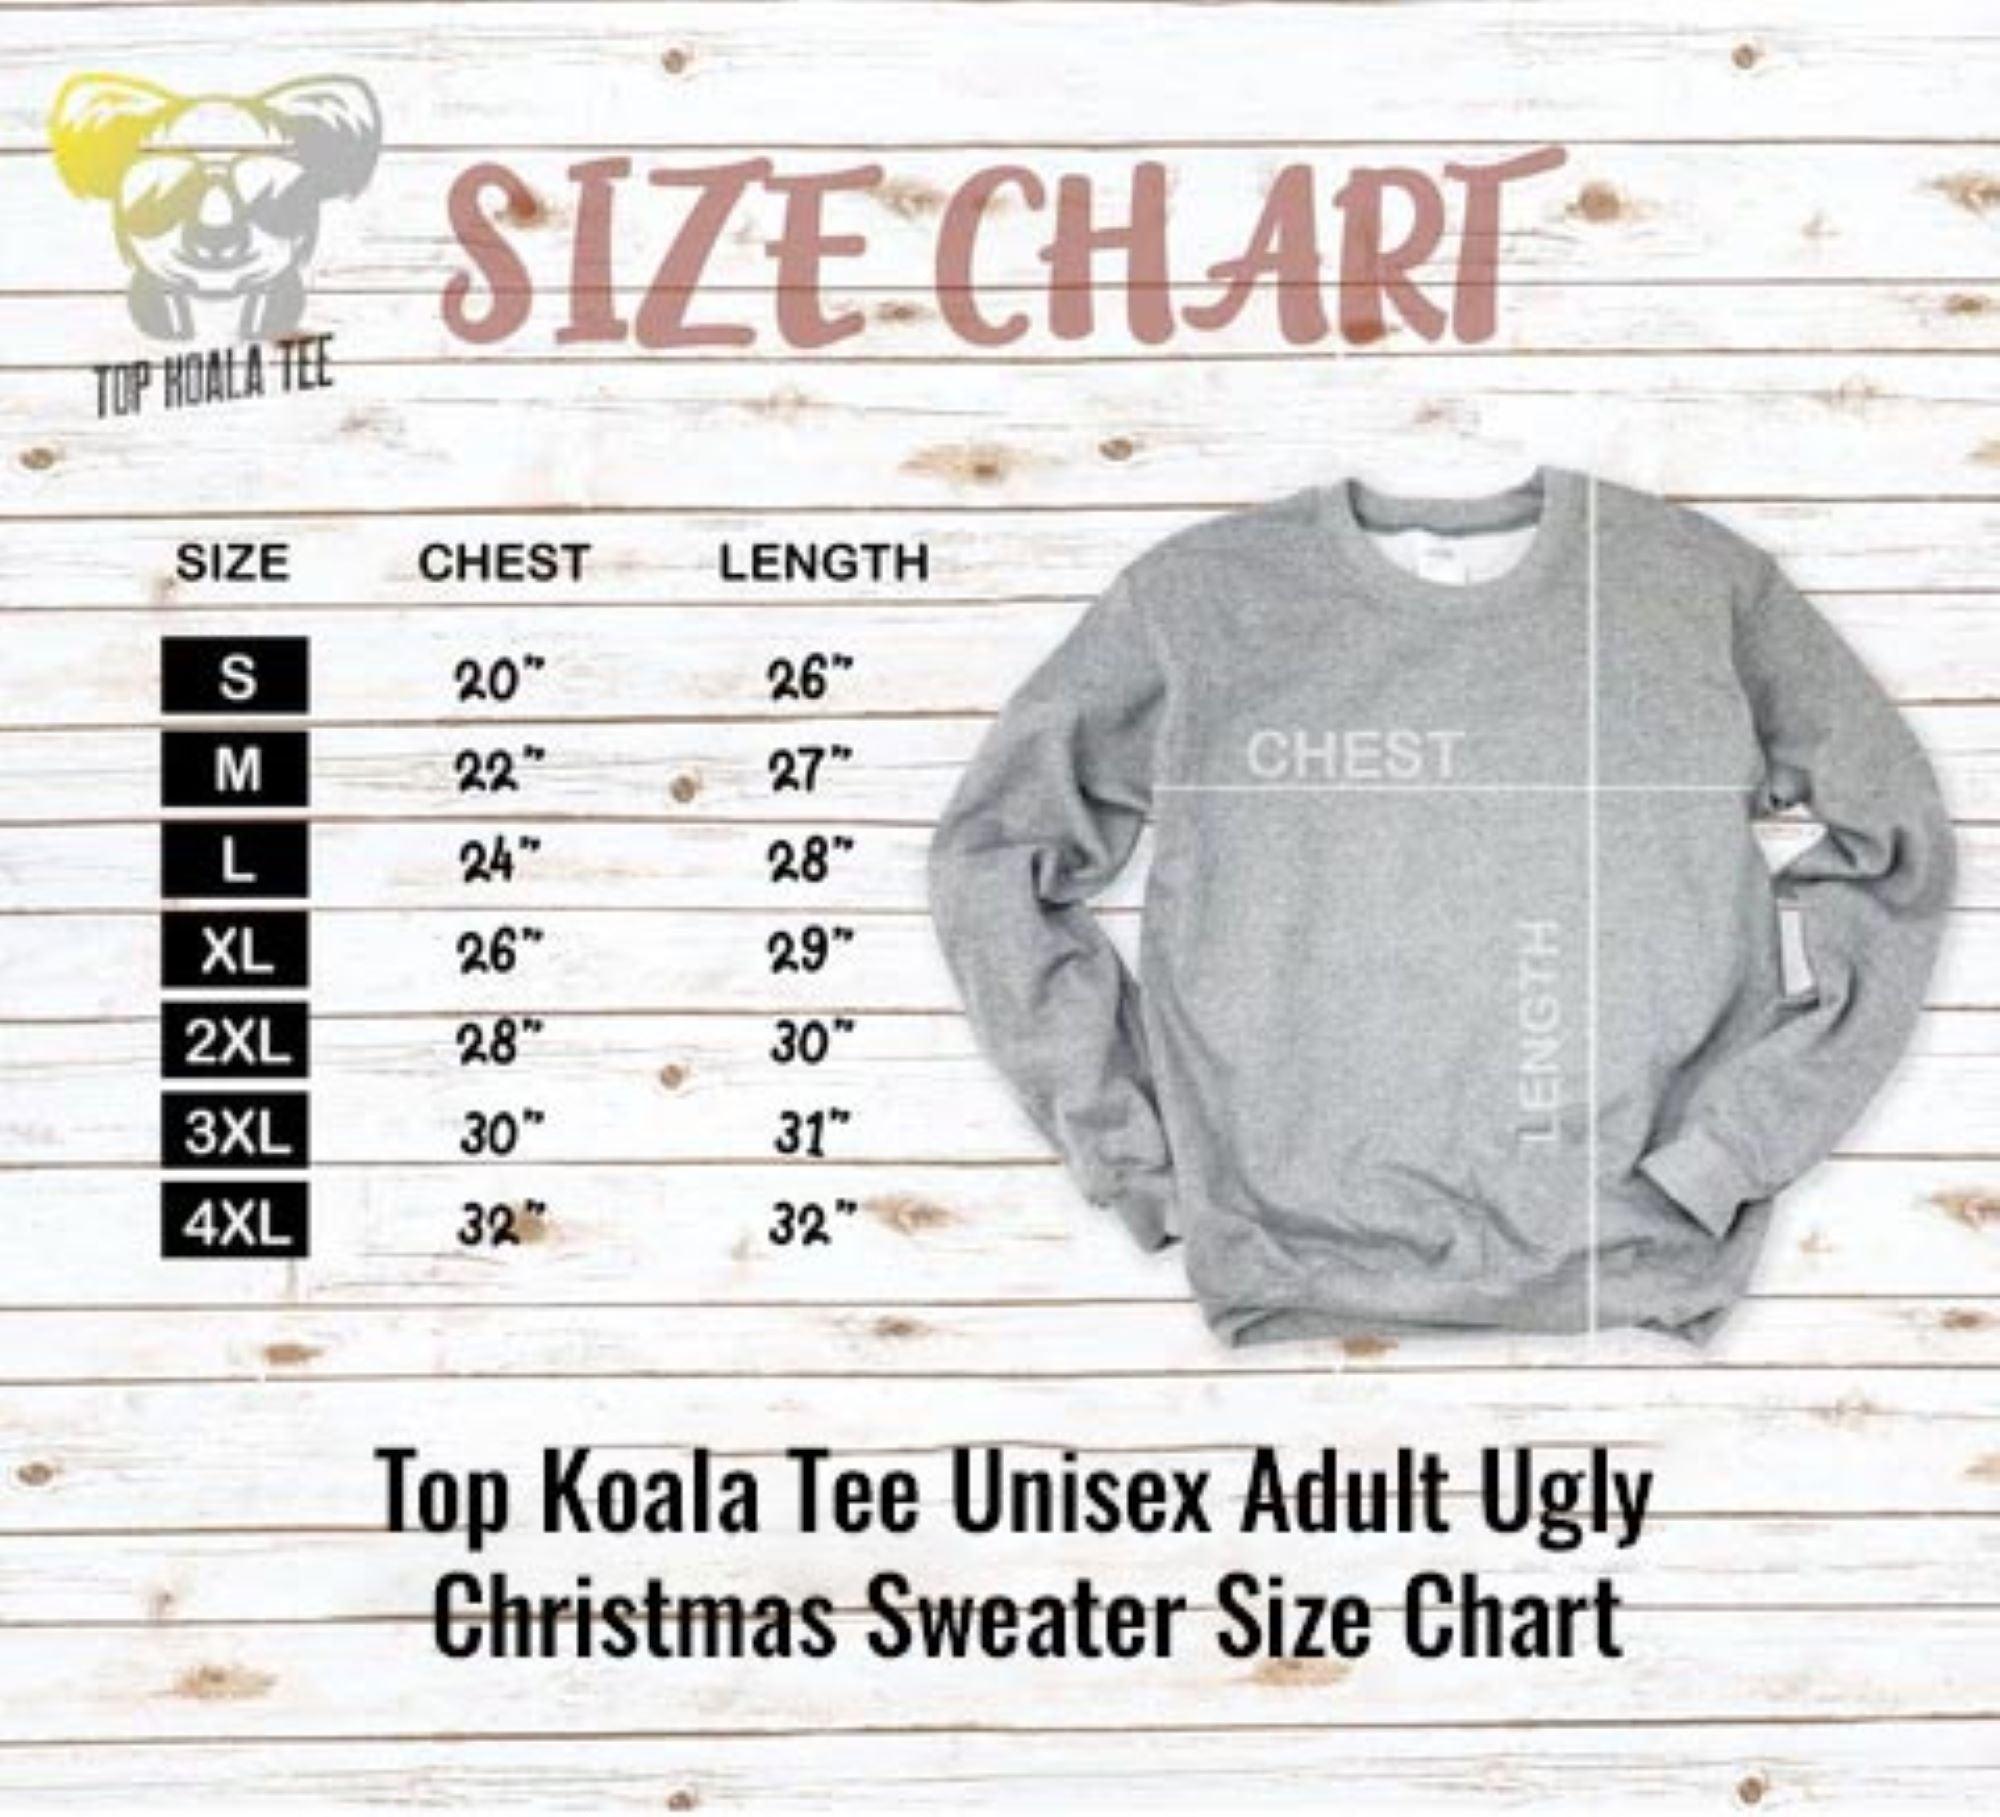 Santa's Coming That's What She Said Ugly Christmas Sweater - TopKoalaTee